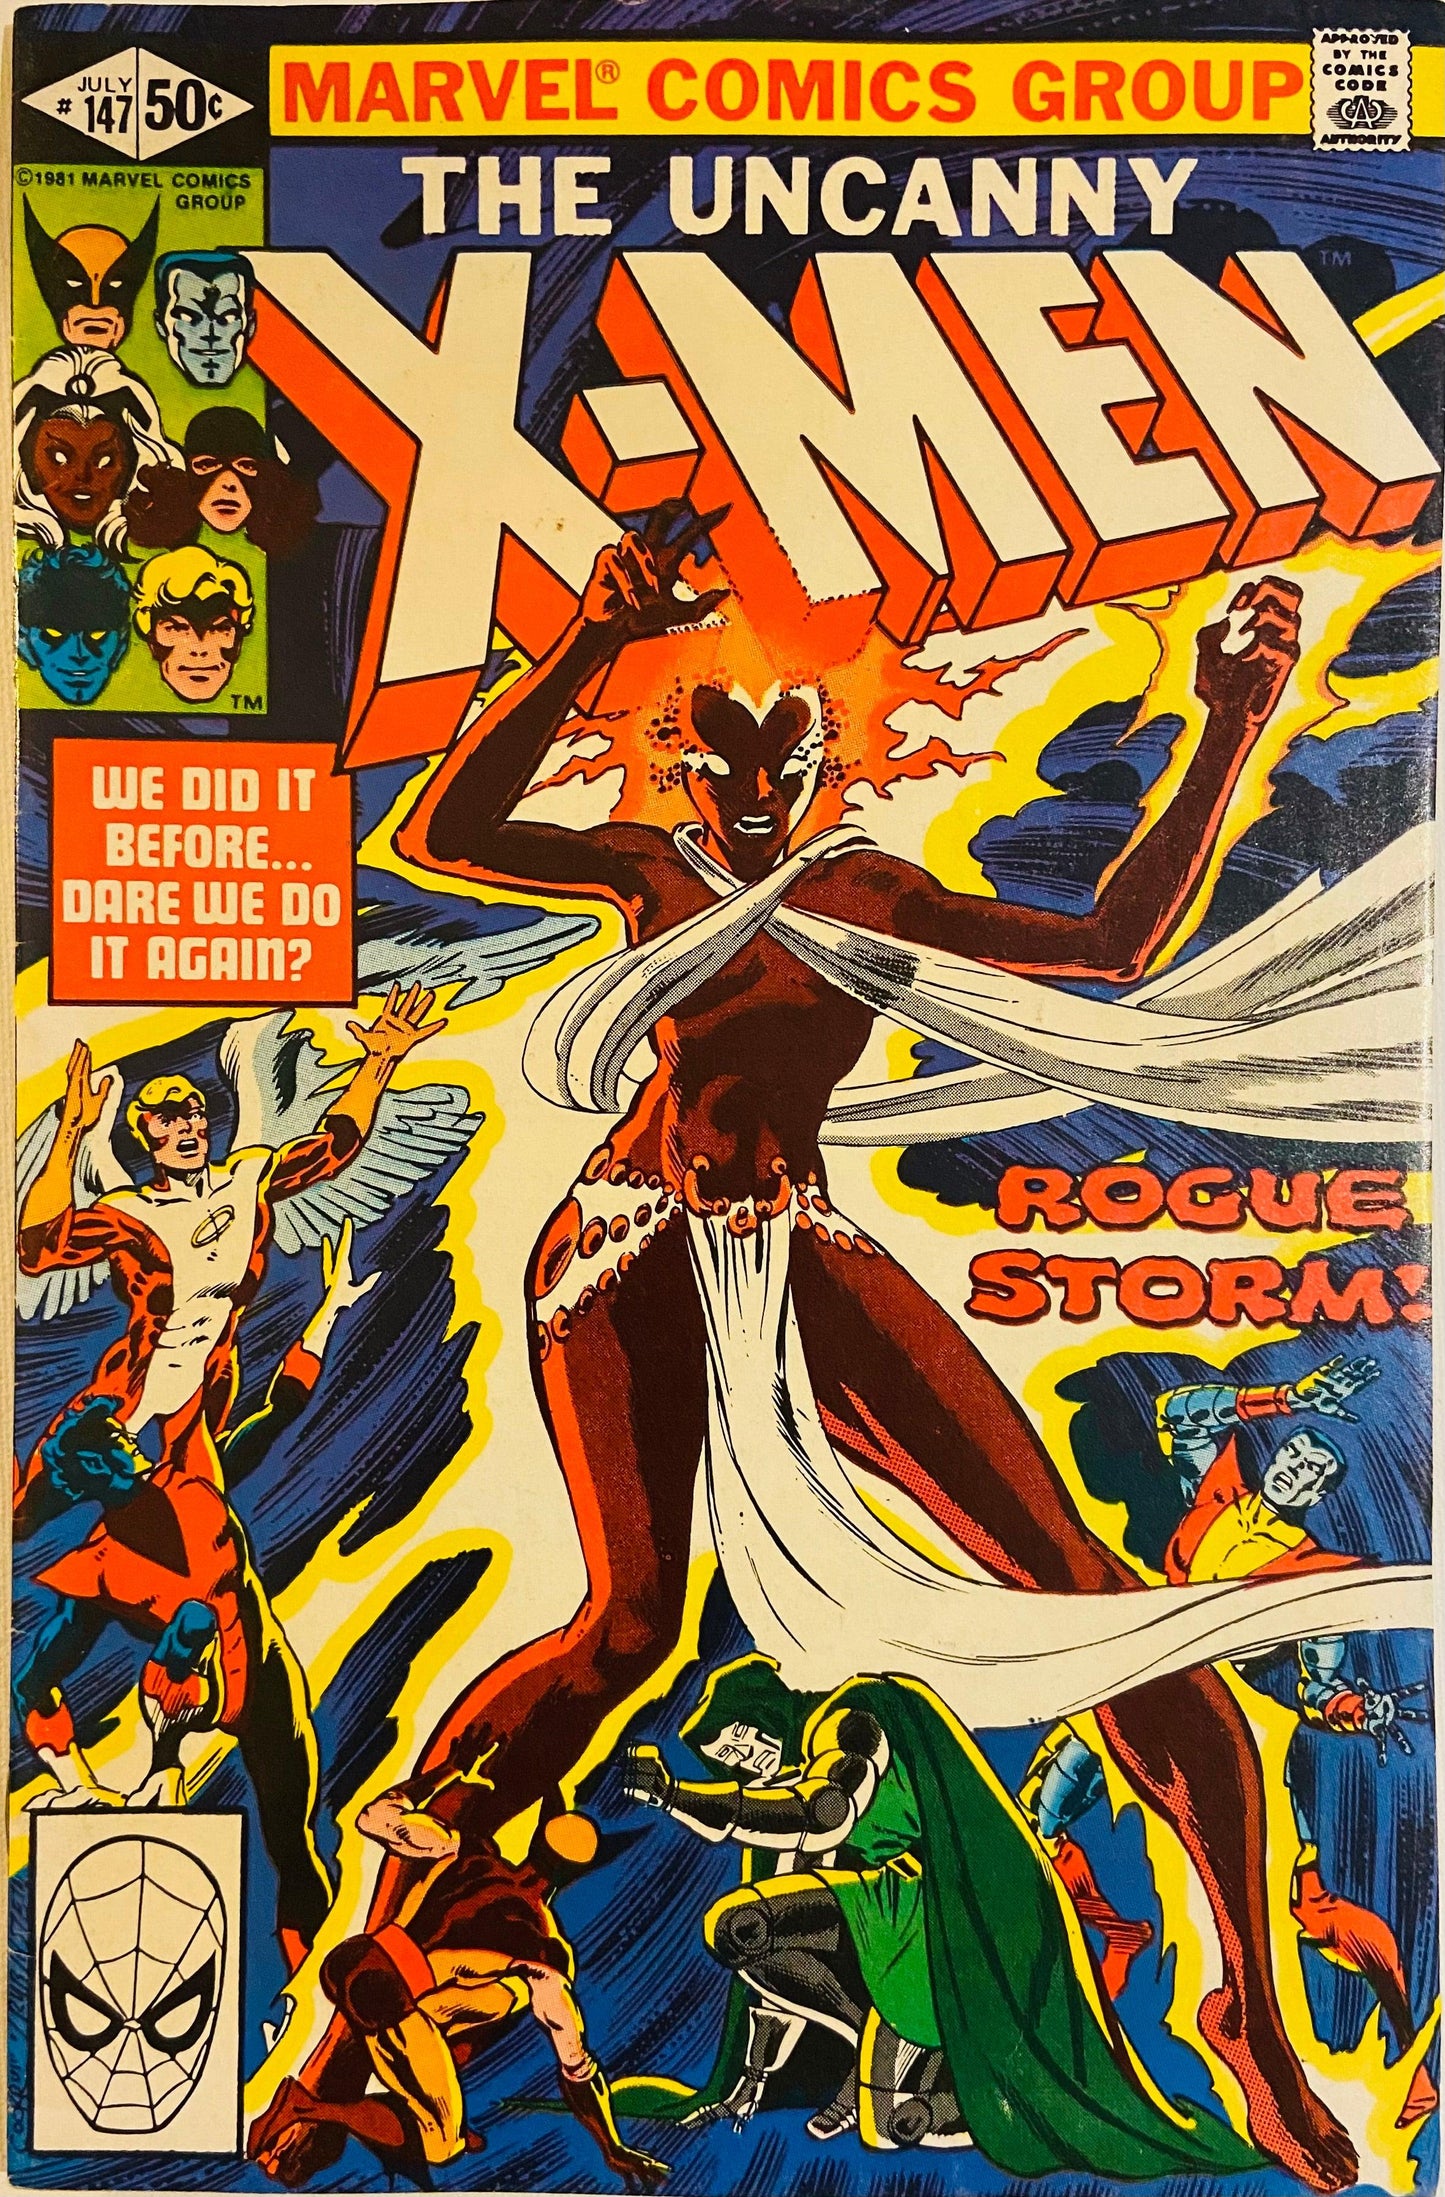 Uncanny X-men #147 - HolyGrail Comix